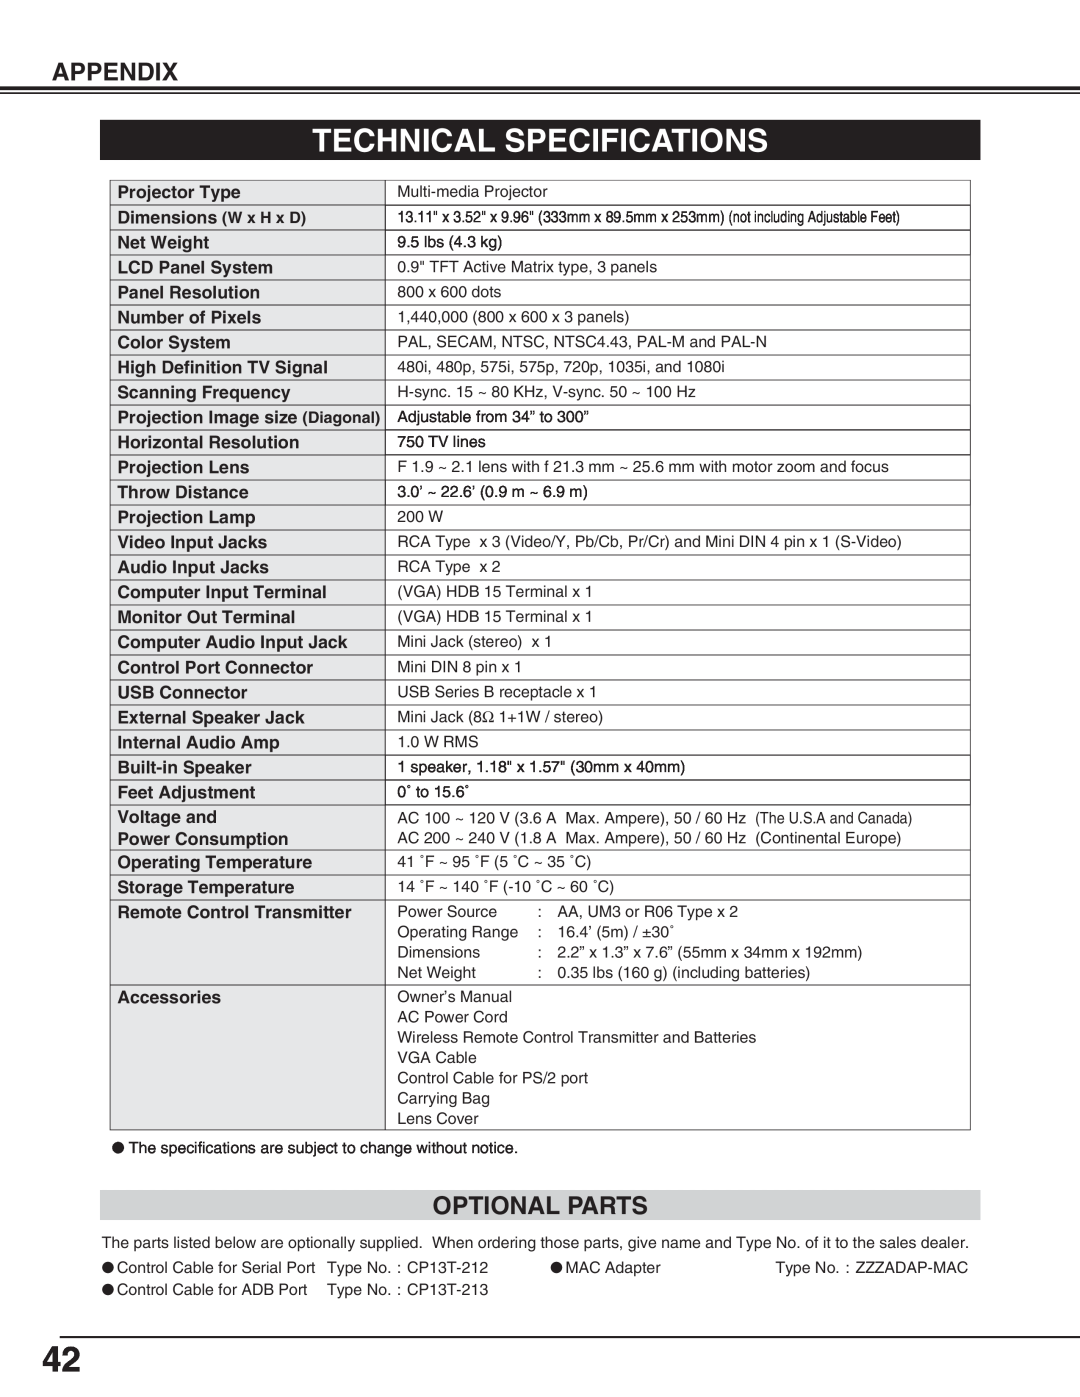 BOXLIGHT cp-16t manual Technical Specifications, Optional Parts, Appendix 